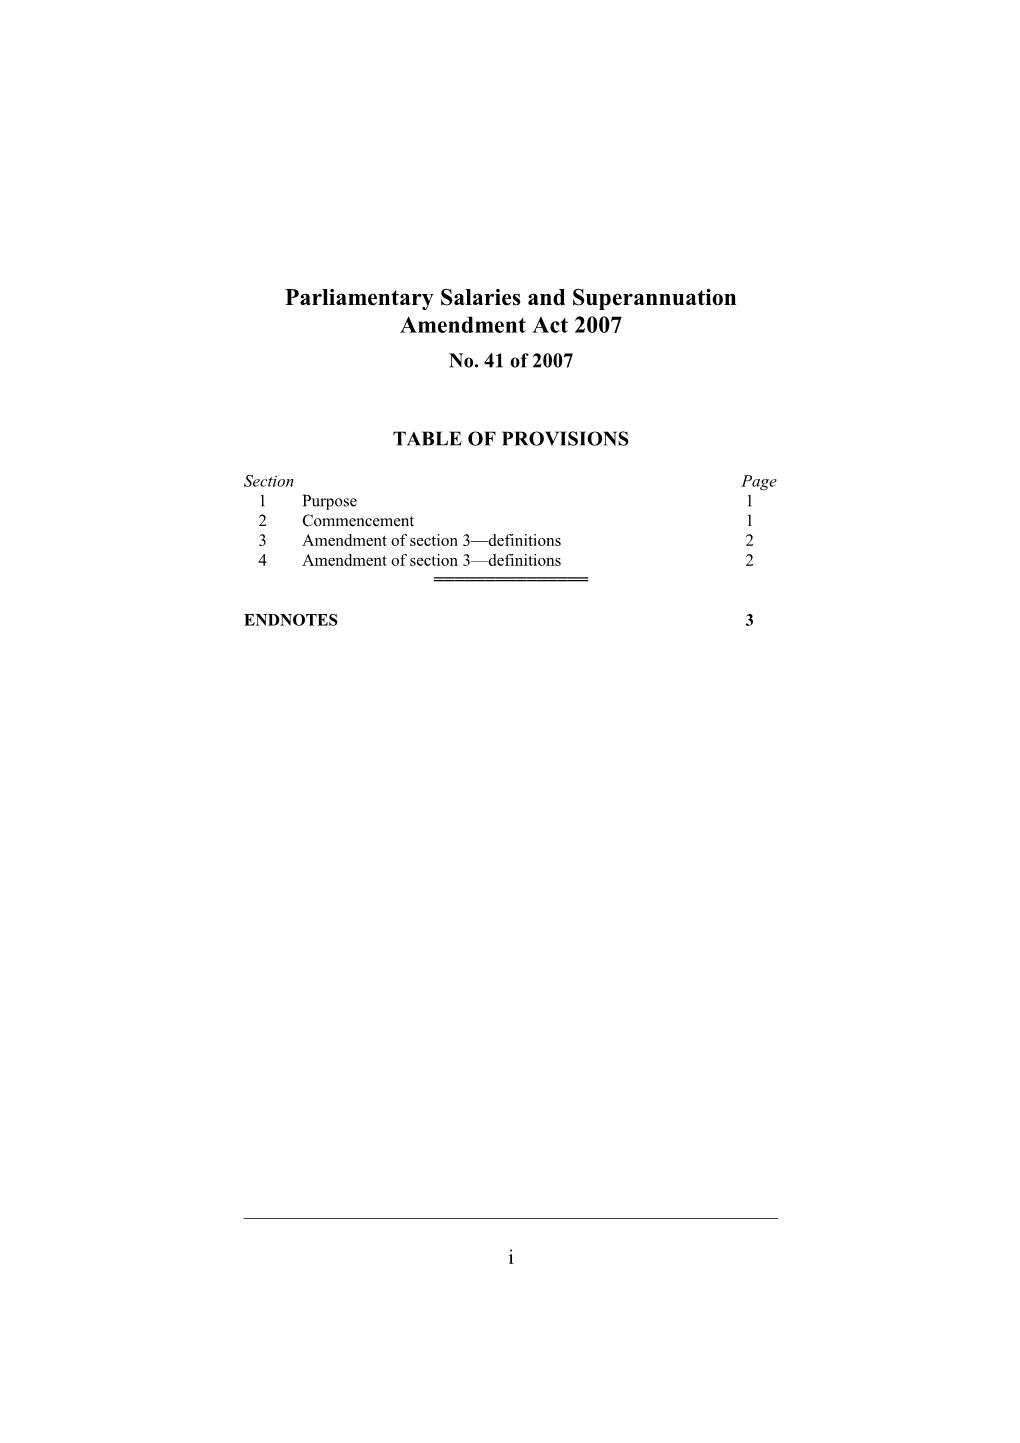 Parliamentary Salaries and Superannuation Amendment Act 2007